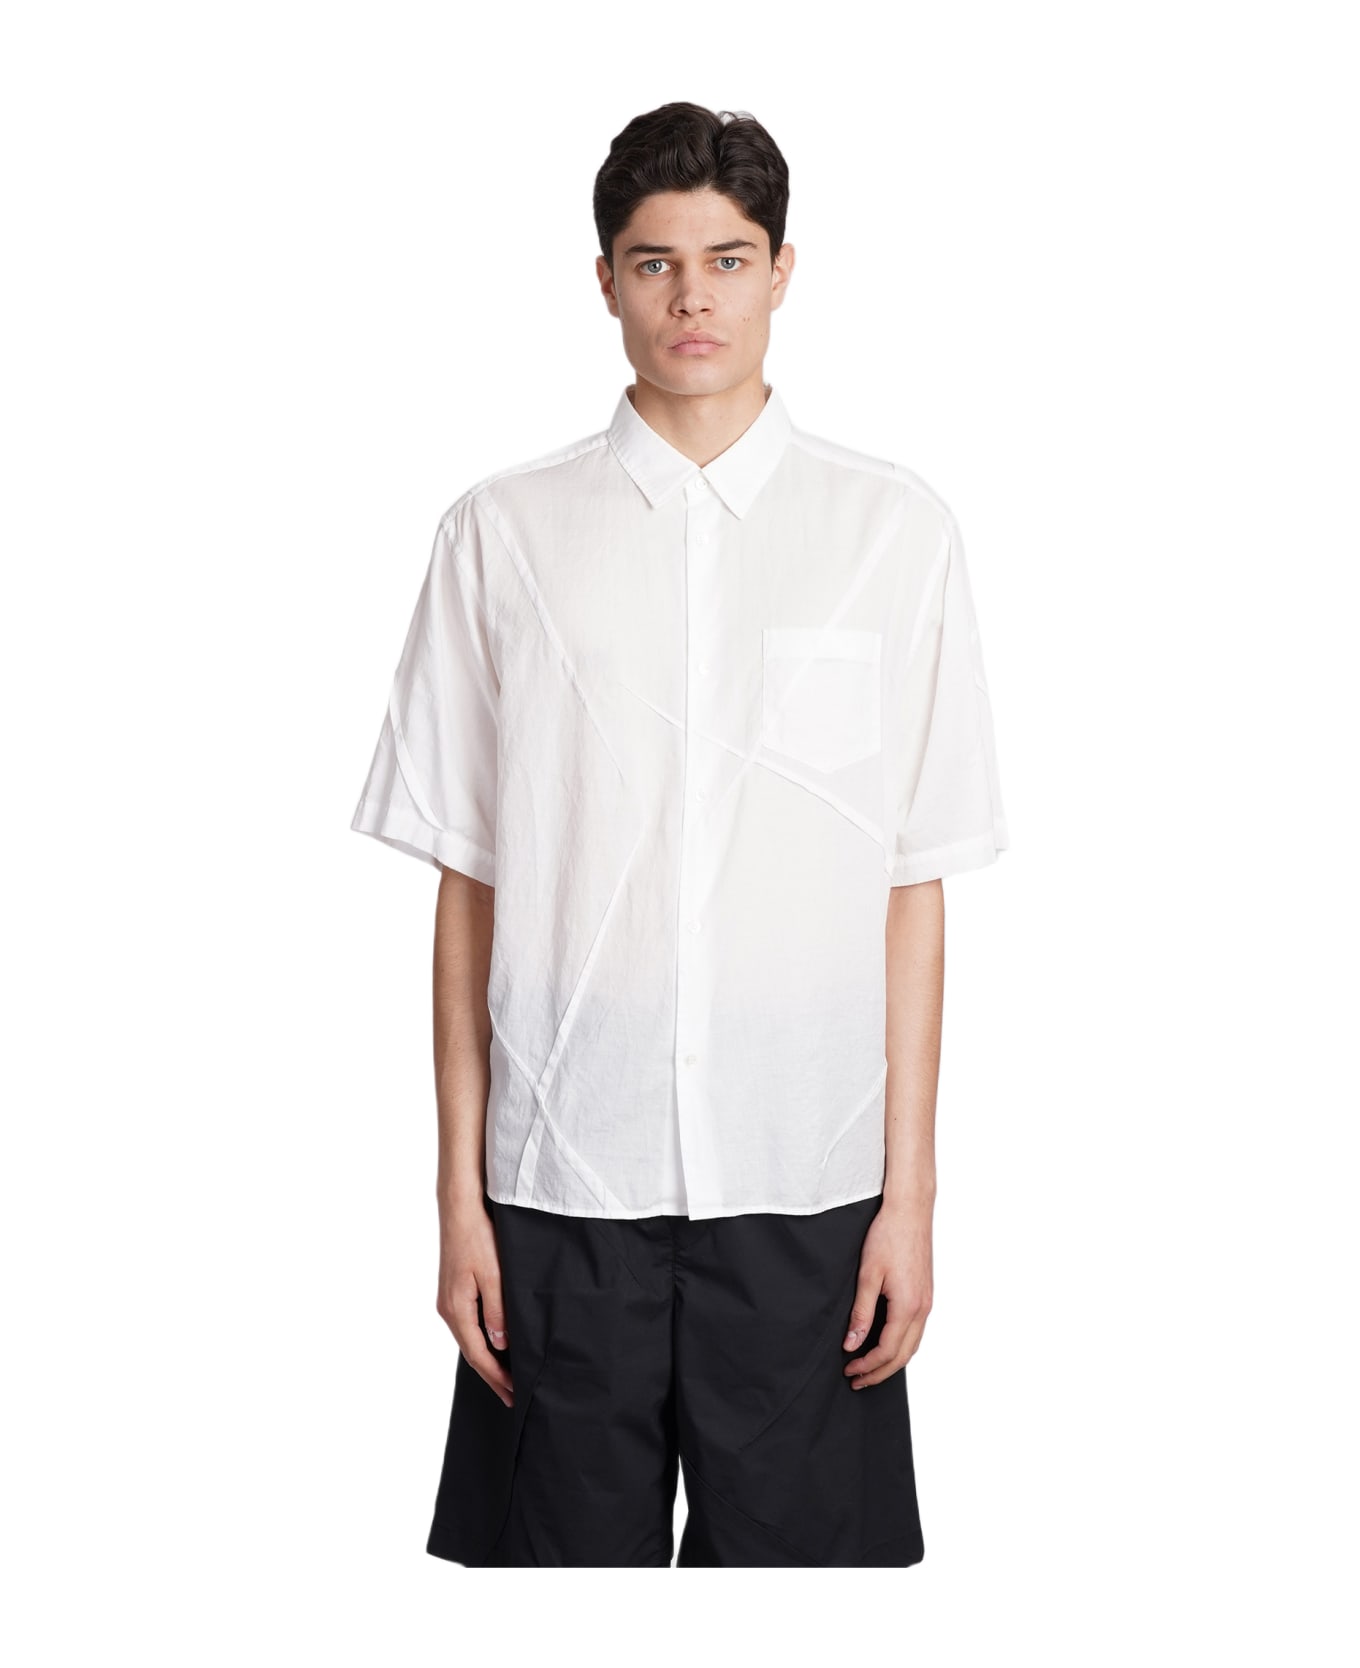 Undercover Jun Takahashi Shirt In White Cotton - white